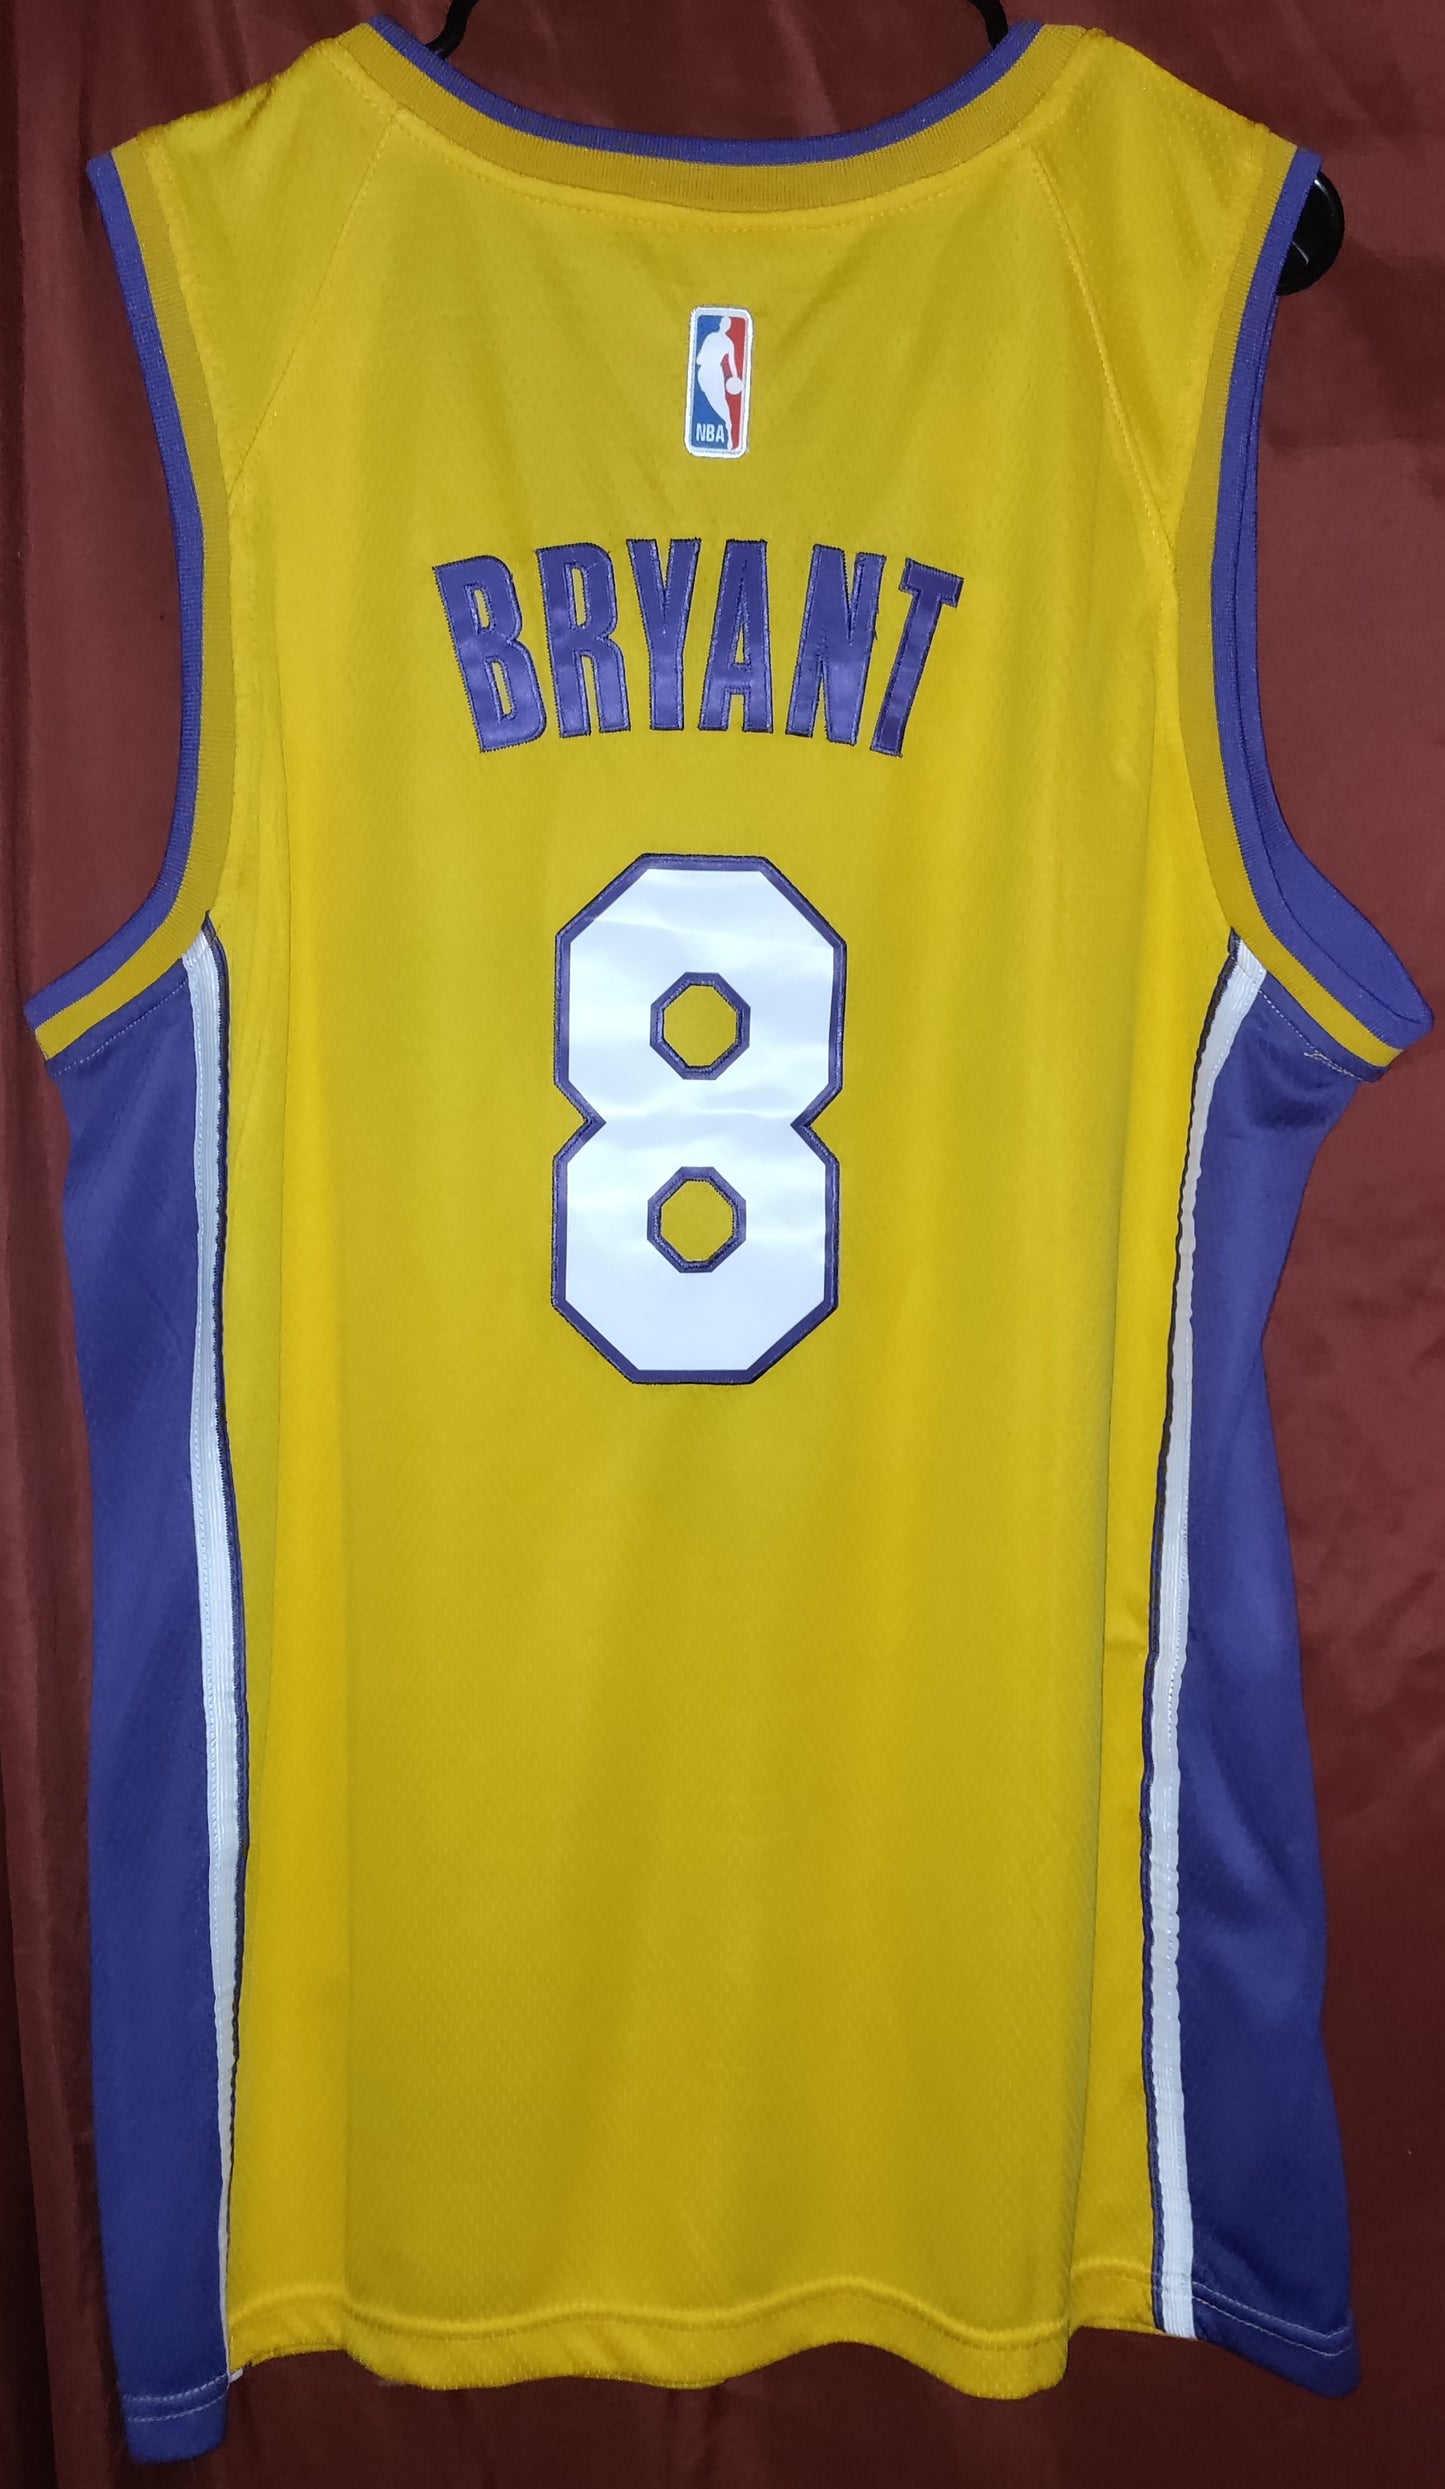 Los Angeles Lakers #8 Kobe Bryant (52) XL